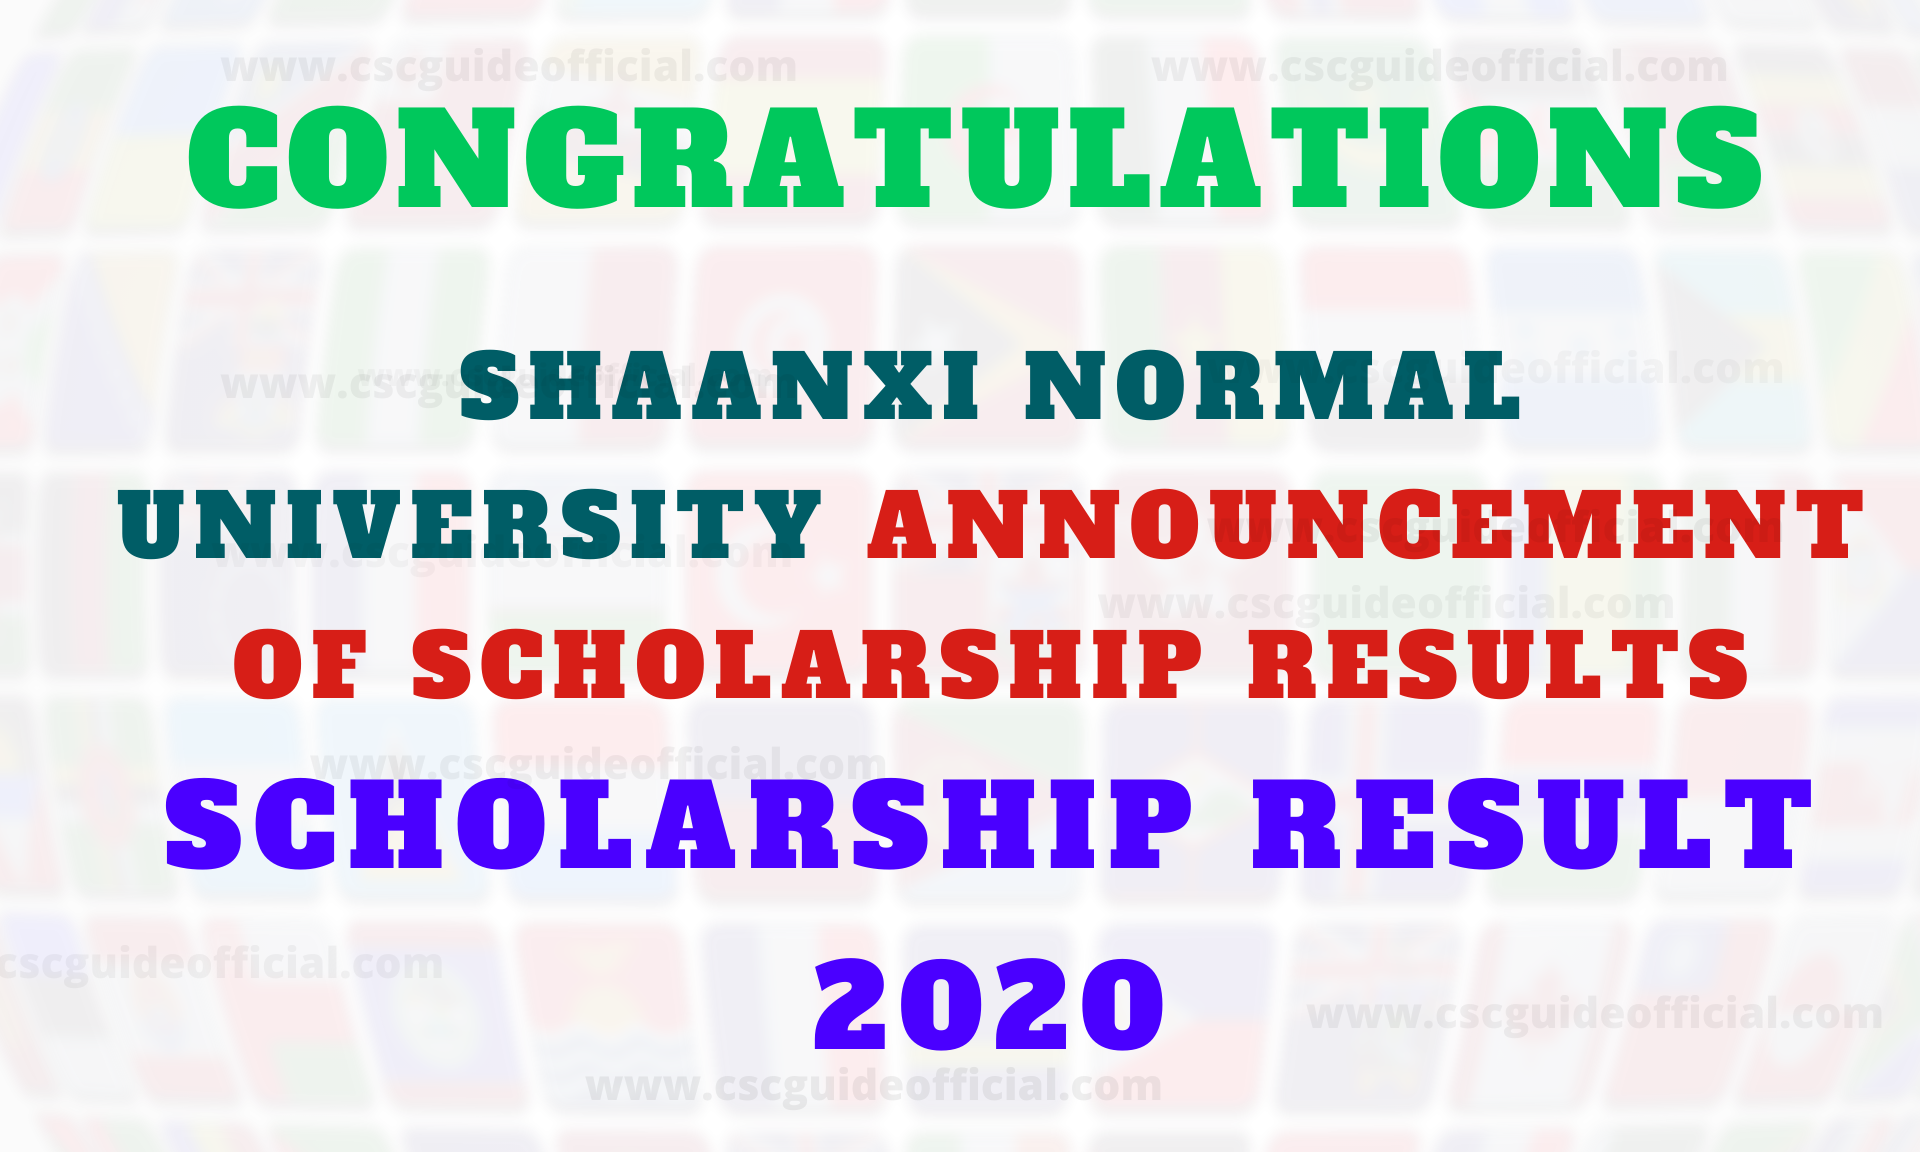 shaanxi normal university scholarship results 2020